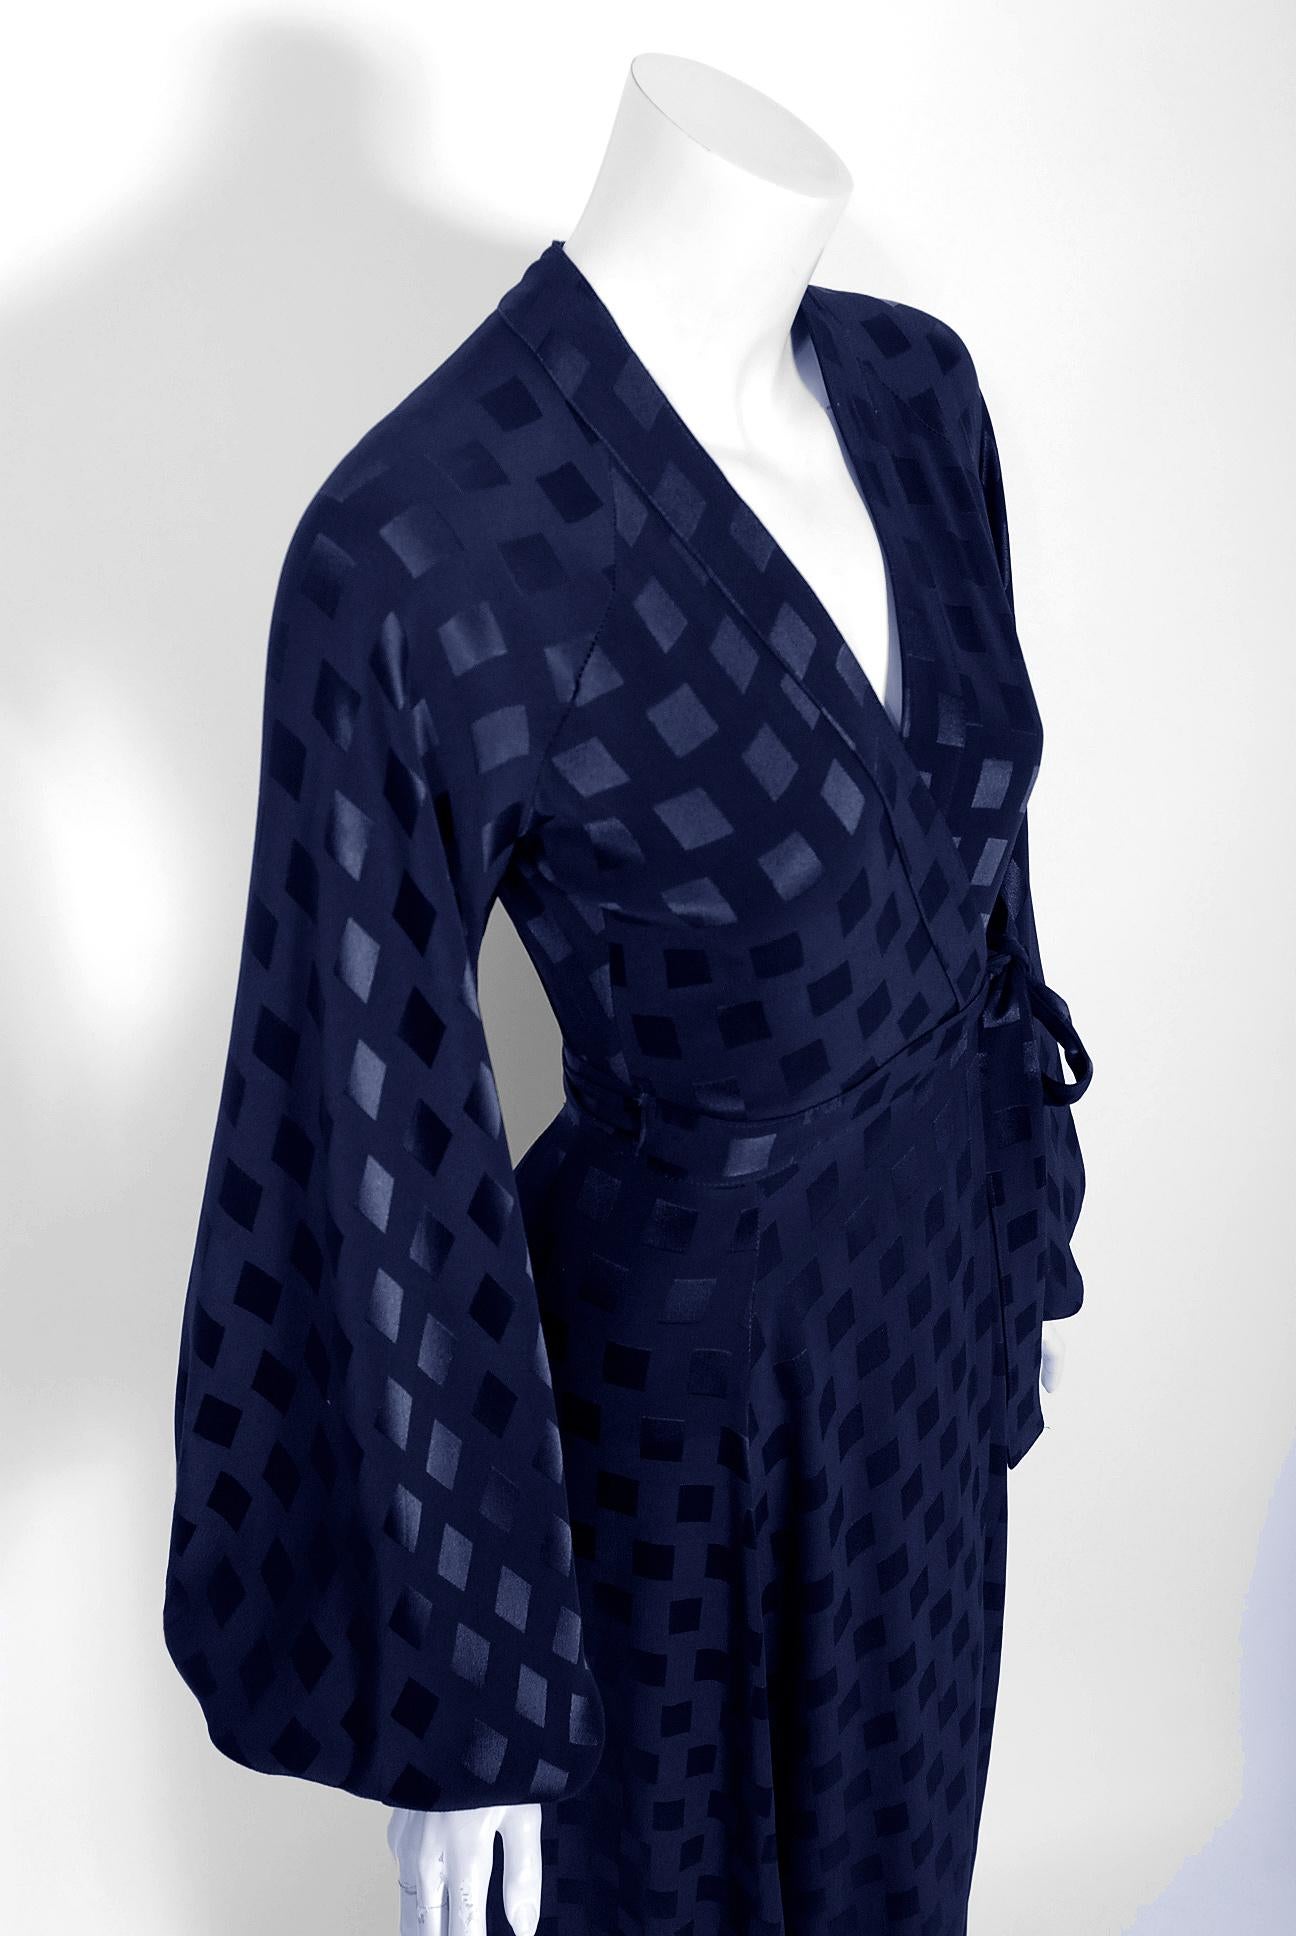 Black Ossie Clark for Quorum Navy Deco Print Satin Backless Billow-Sleeve Gown, 1972  